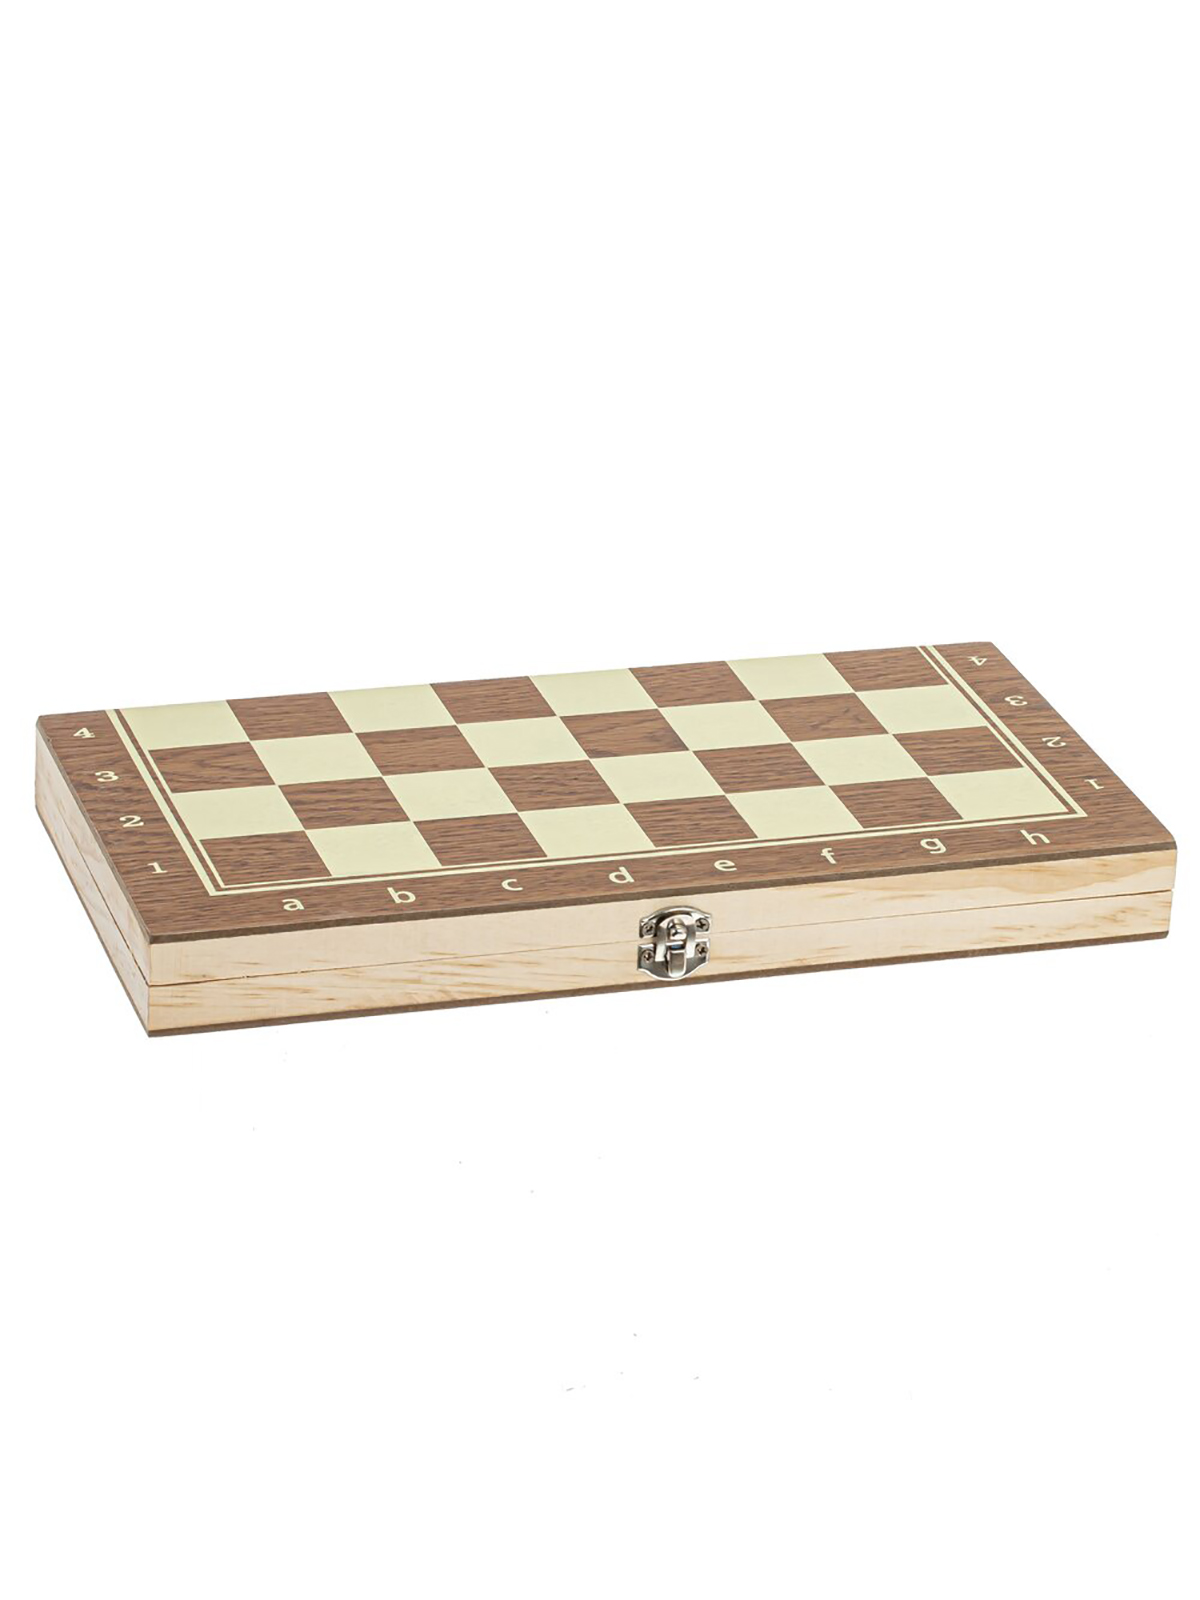 Шахматы шашки нарды 3 в 1 Remecoclub деревянные 796260 29x14,5x3 см